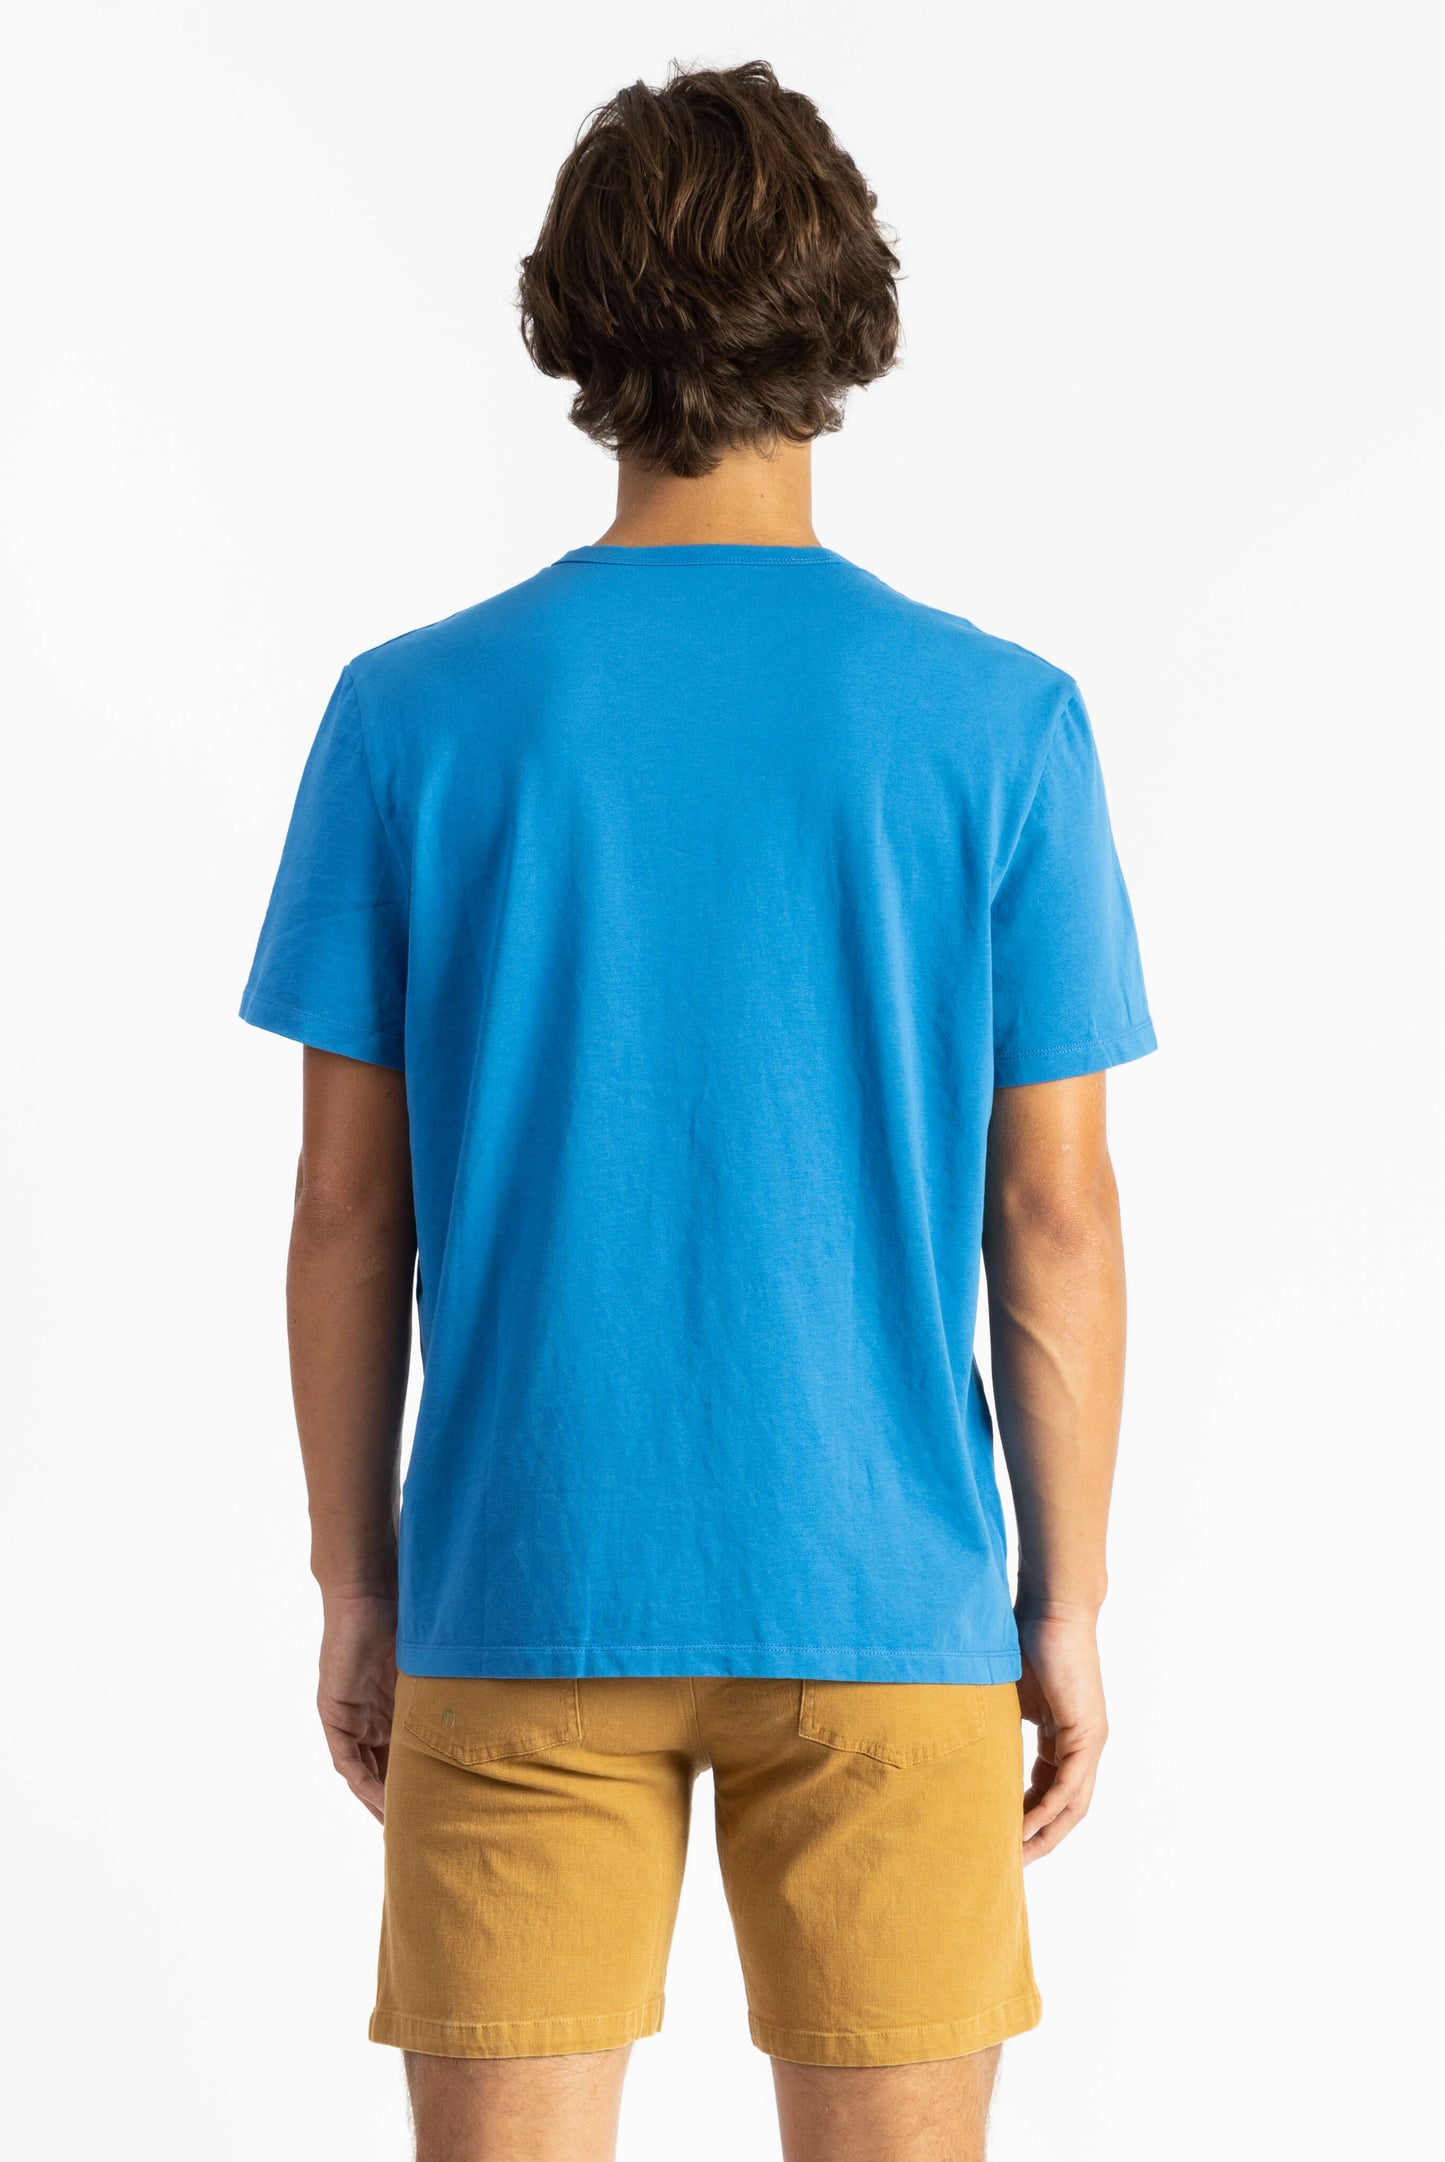 A man wearing a Swedish Blue Workshop Tee Shirt having Manana branding with golden shorts